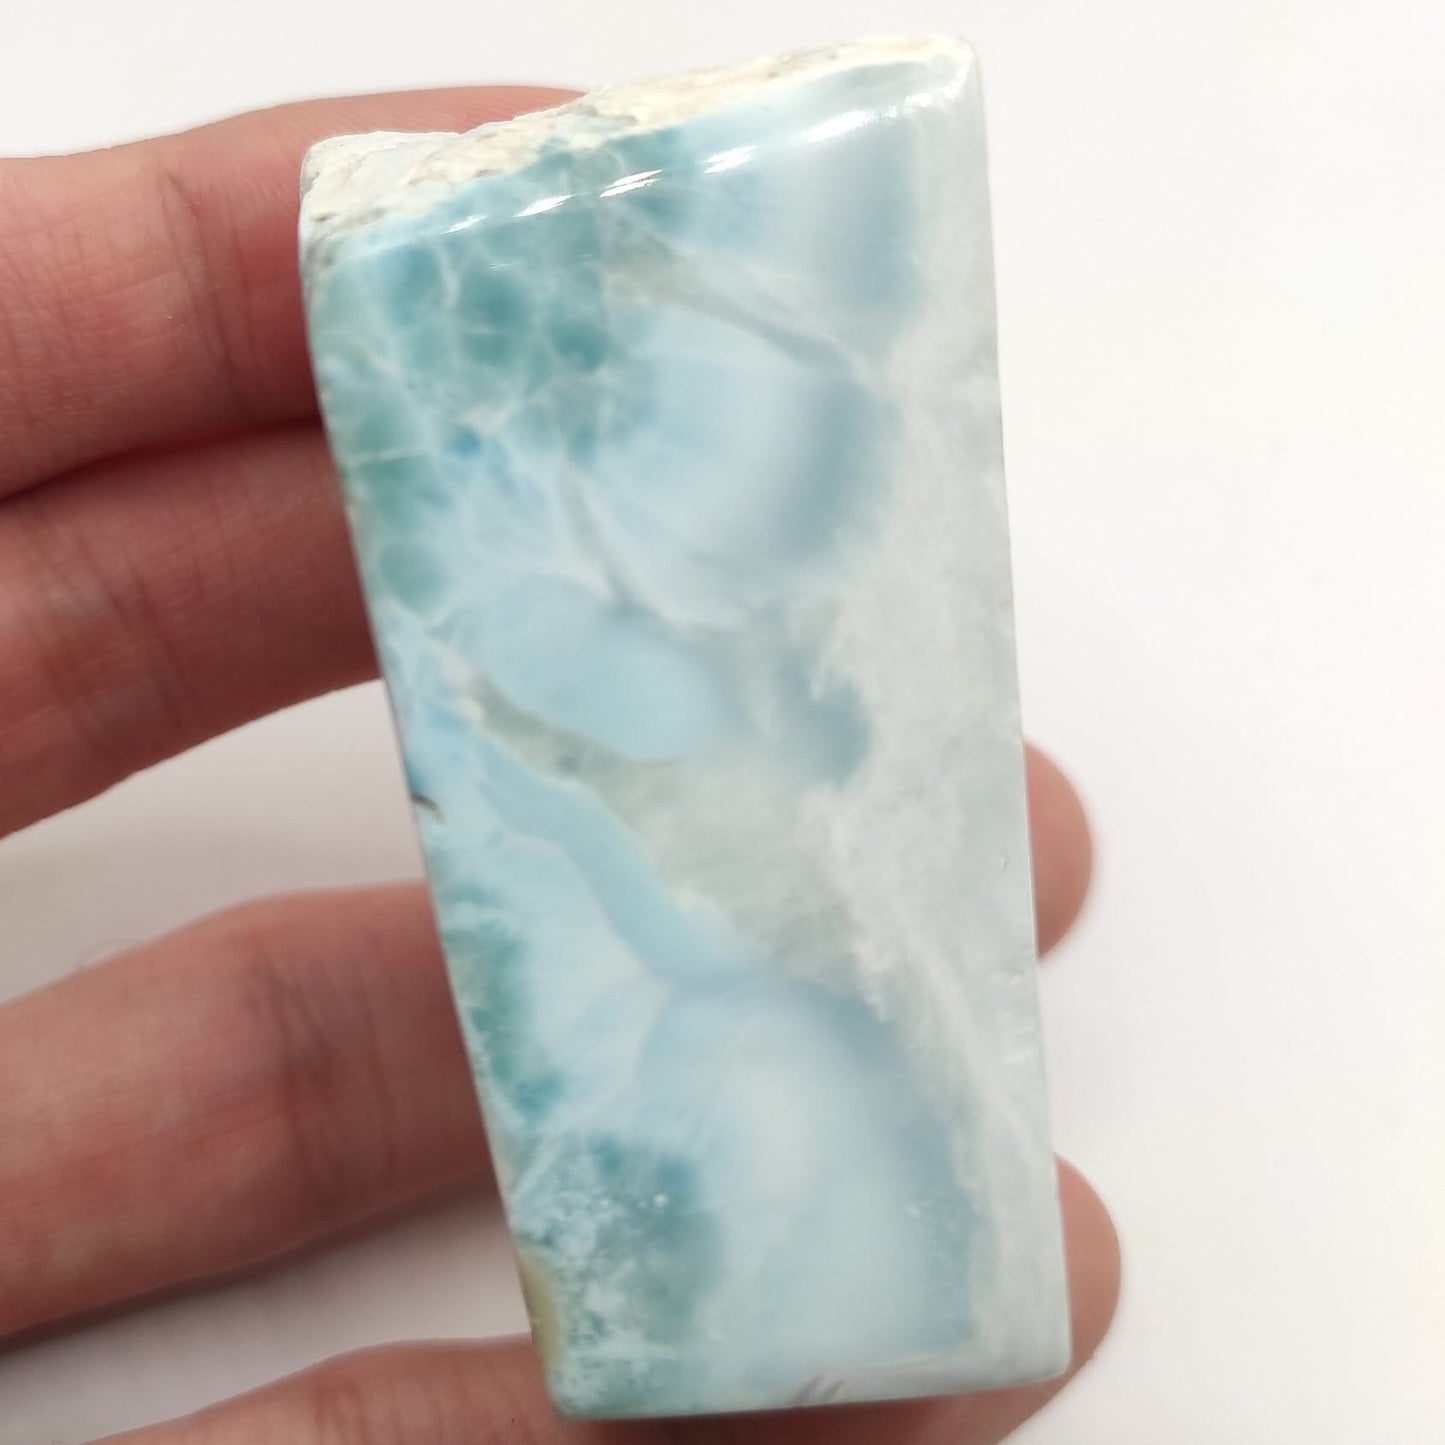 111g Larimar Freeform - Polished and Raw - Sky Blue Larimar - Barahona, Dominican Republic - Rare Larimar Crystal - Hand Polished Larimar